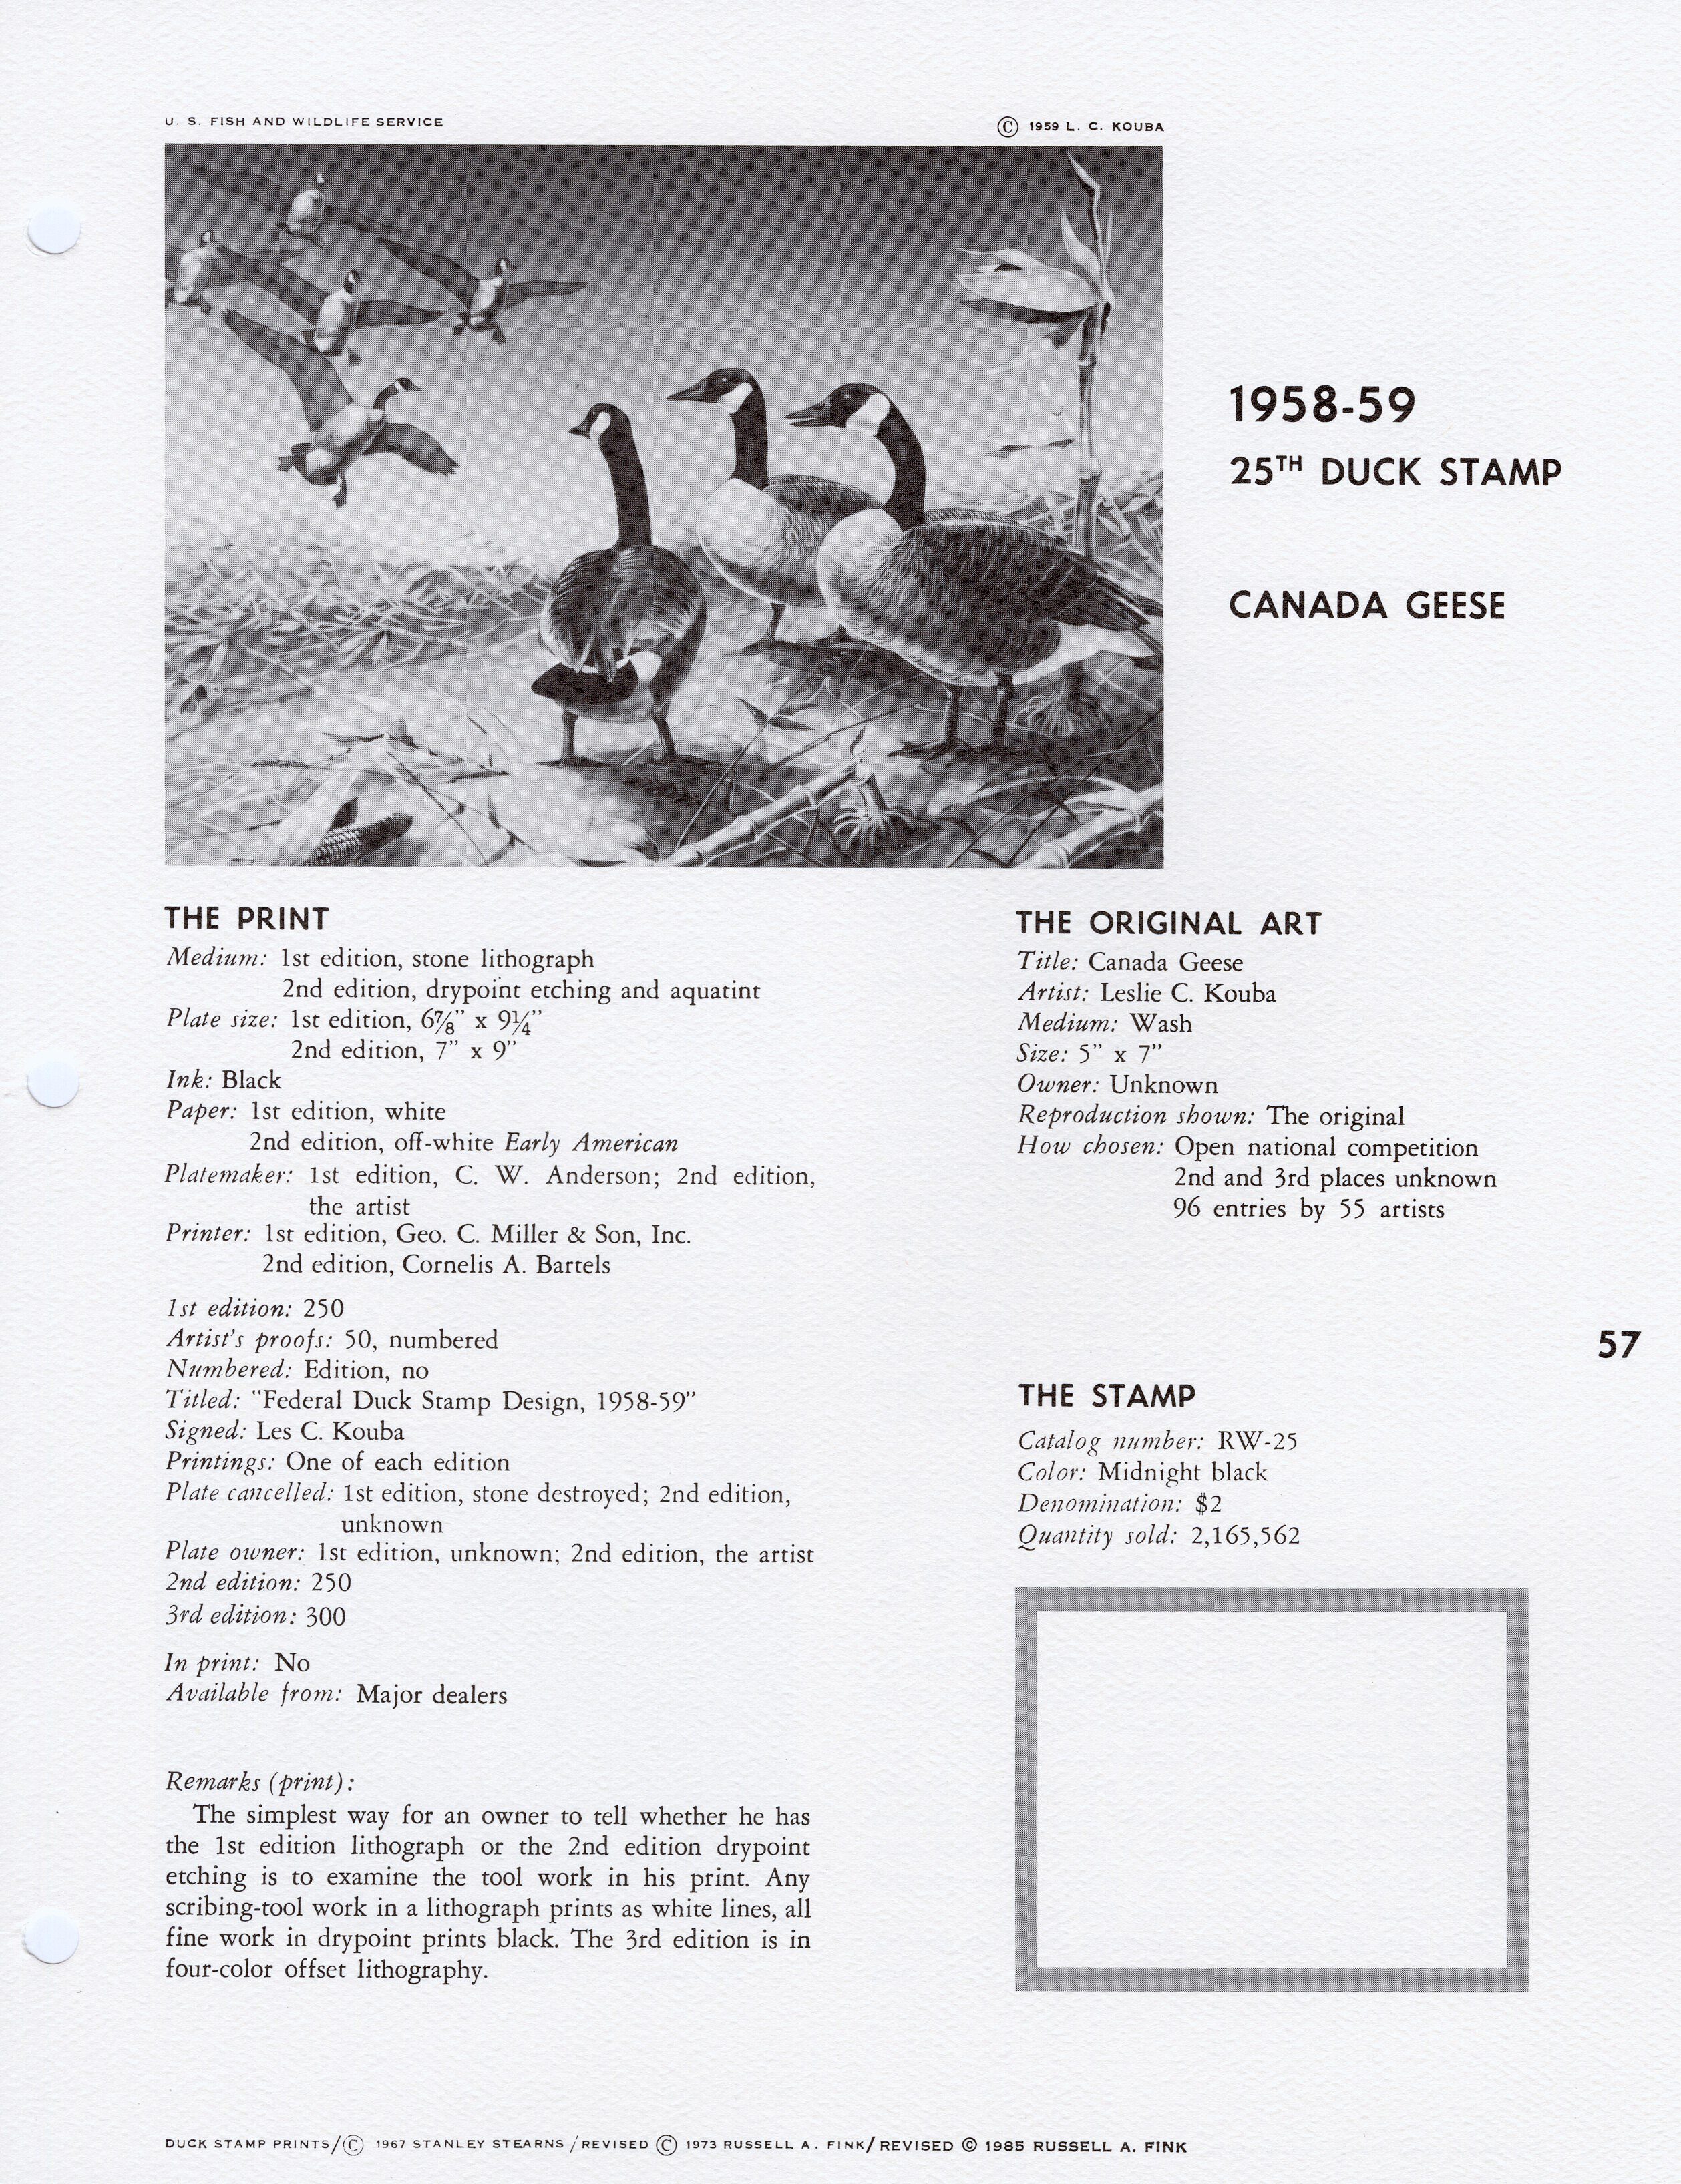 1958-59 Canada Geese by Leslie C. Kouba